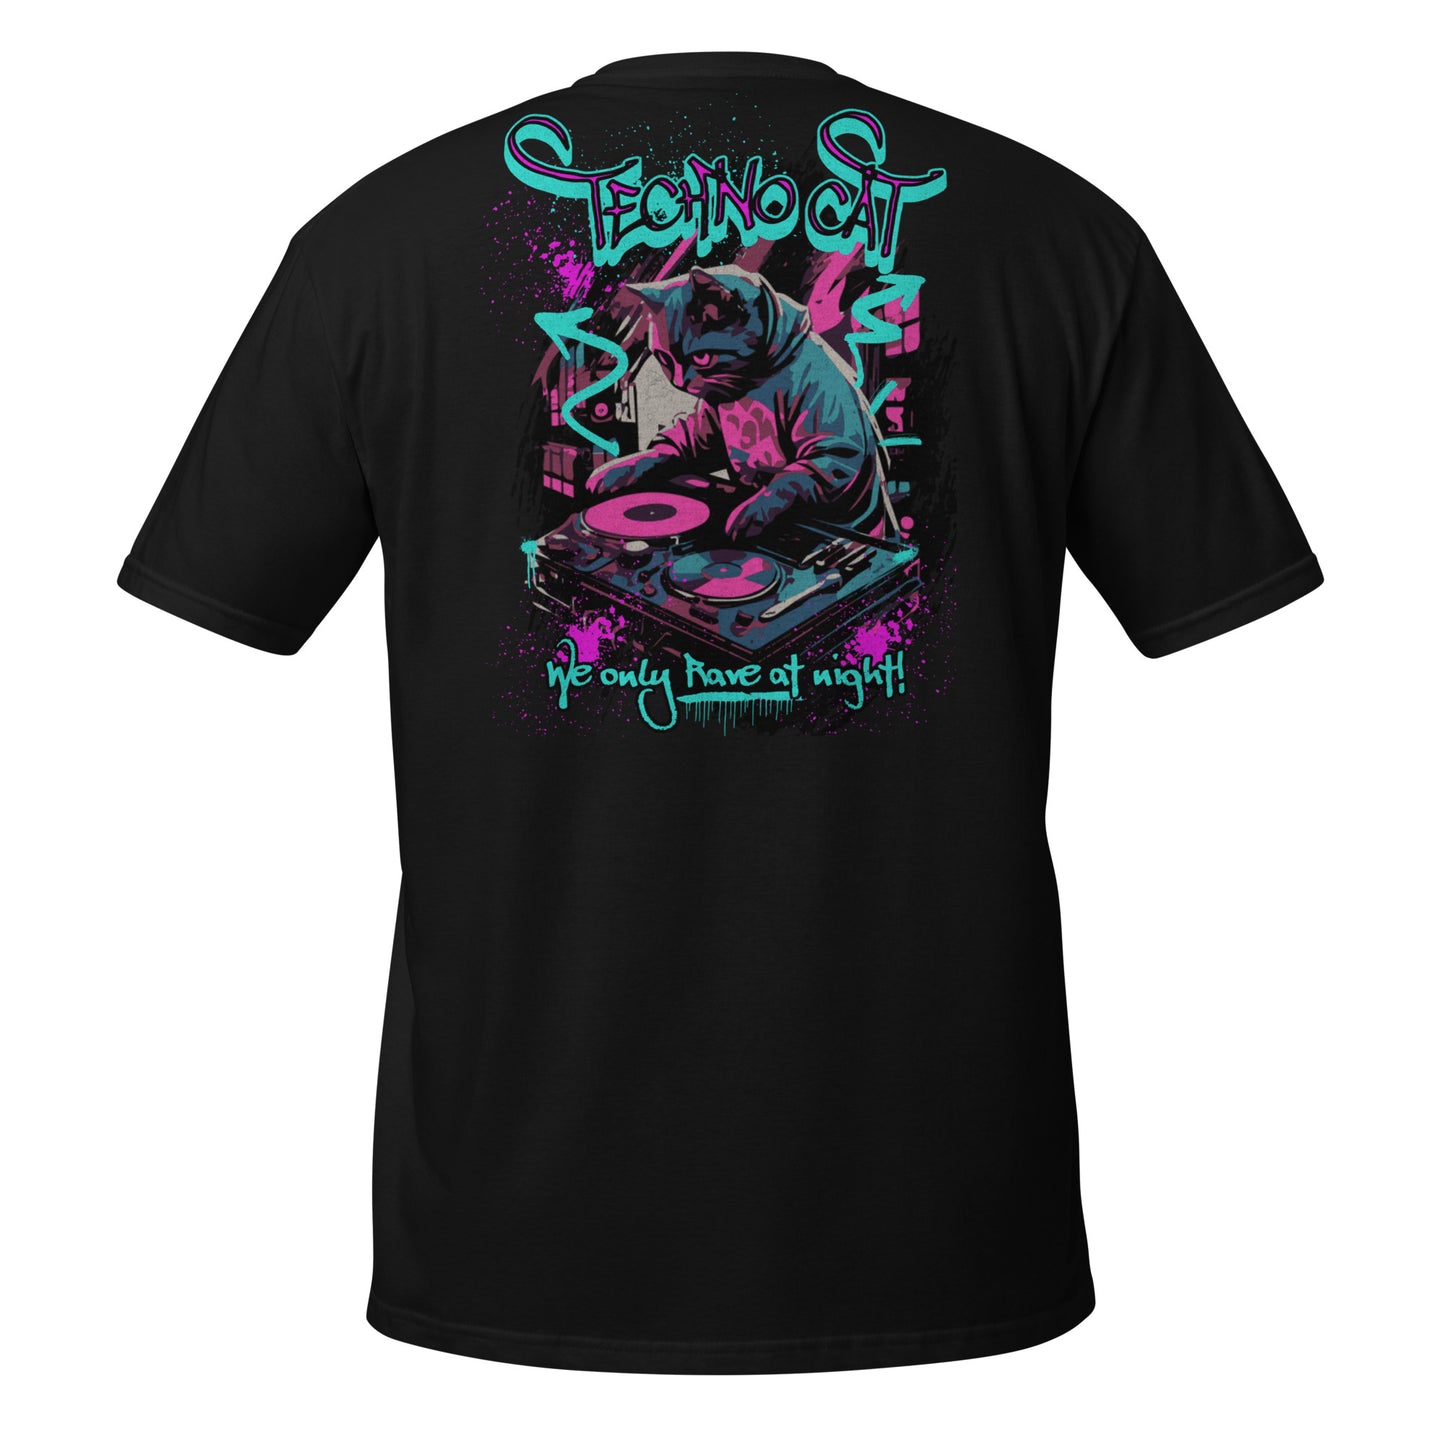 Rave at night -  Unisex T-Shirt